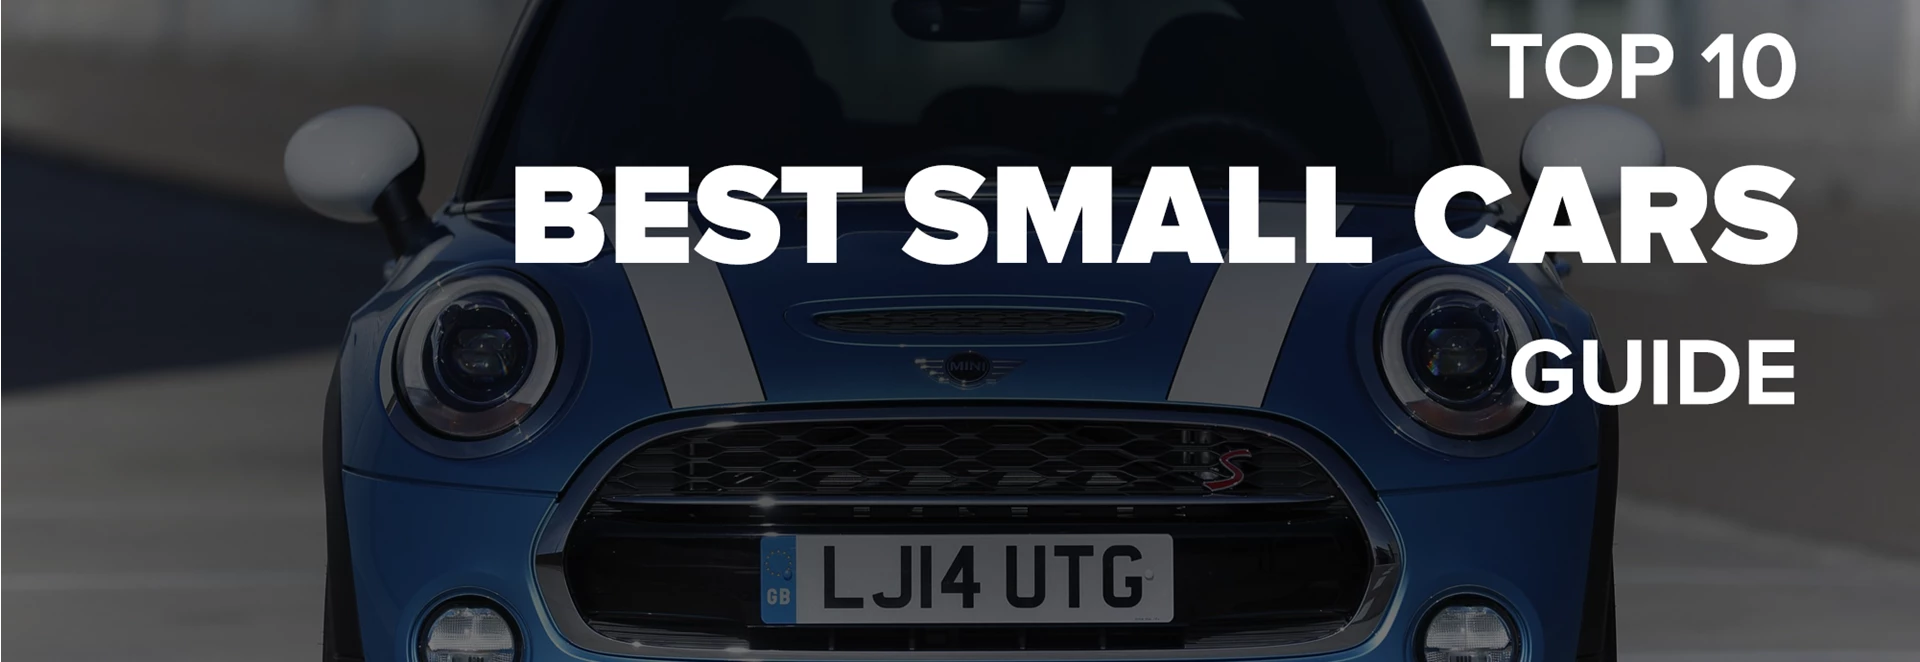 Top ten best small cars 